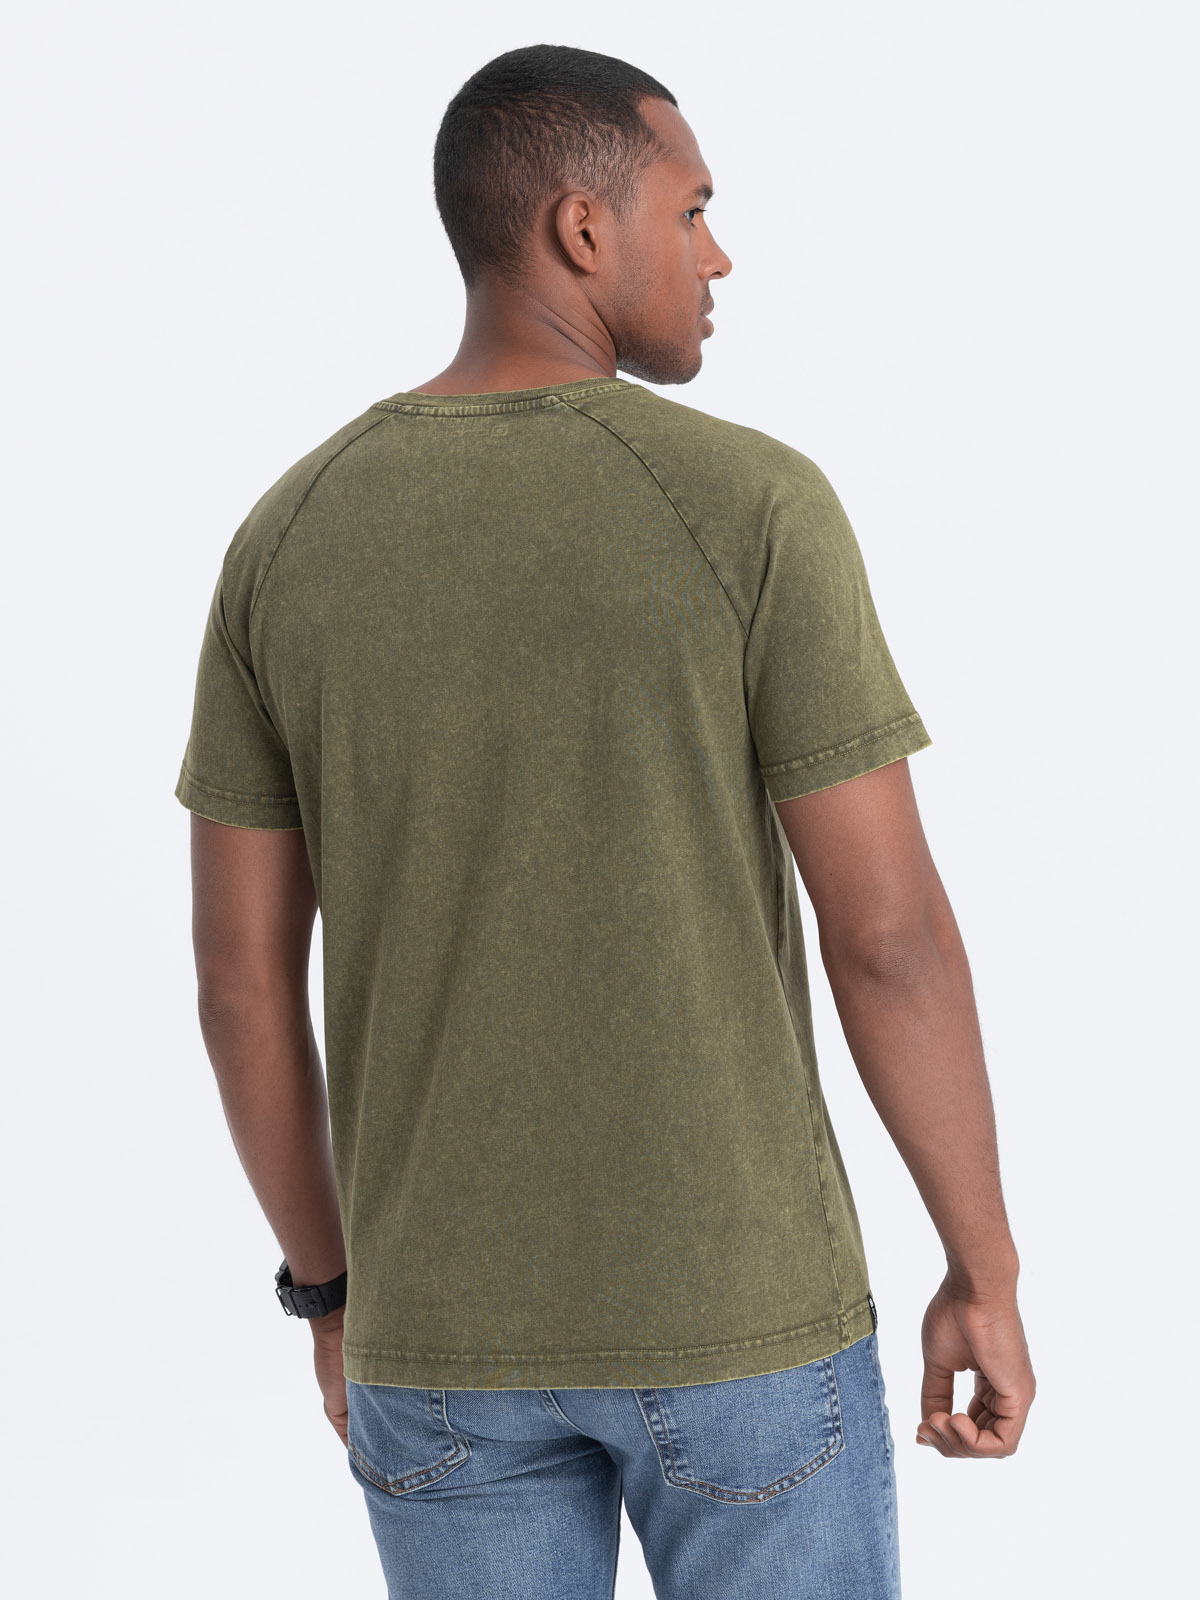 Men\'s T-shirt with henley neckline - dark olive V4 S1757 | Ombre.com -  Men\'s clothing online